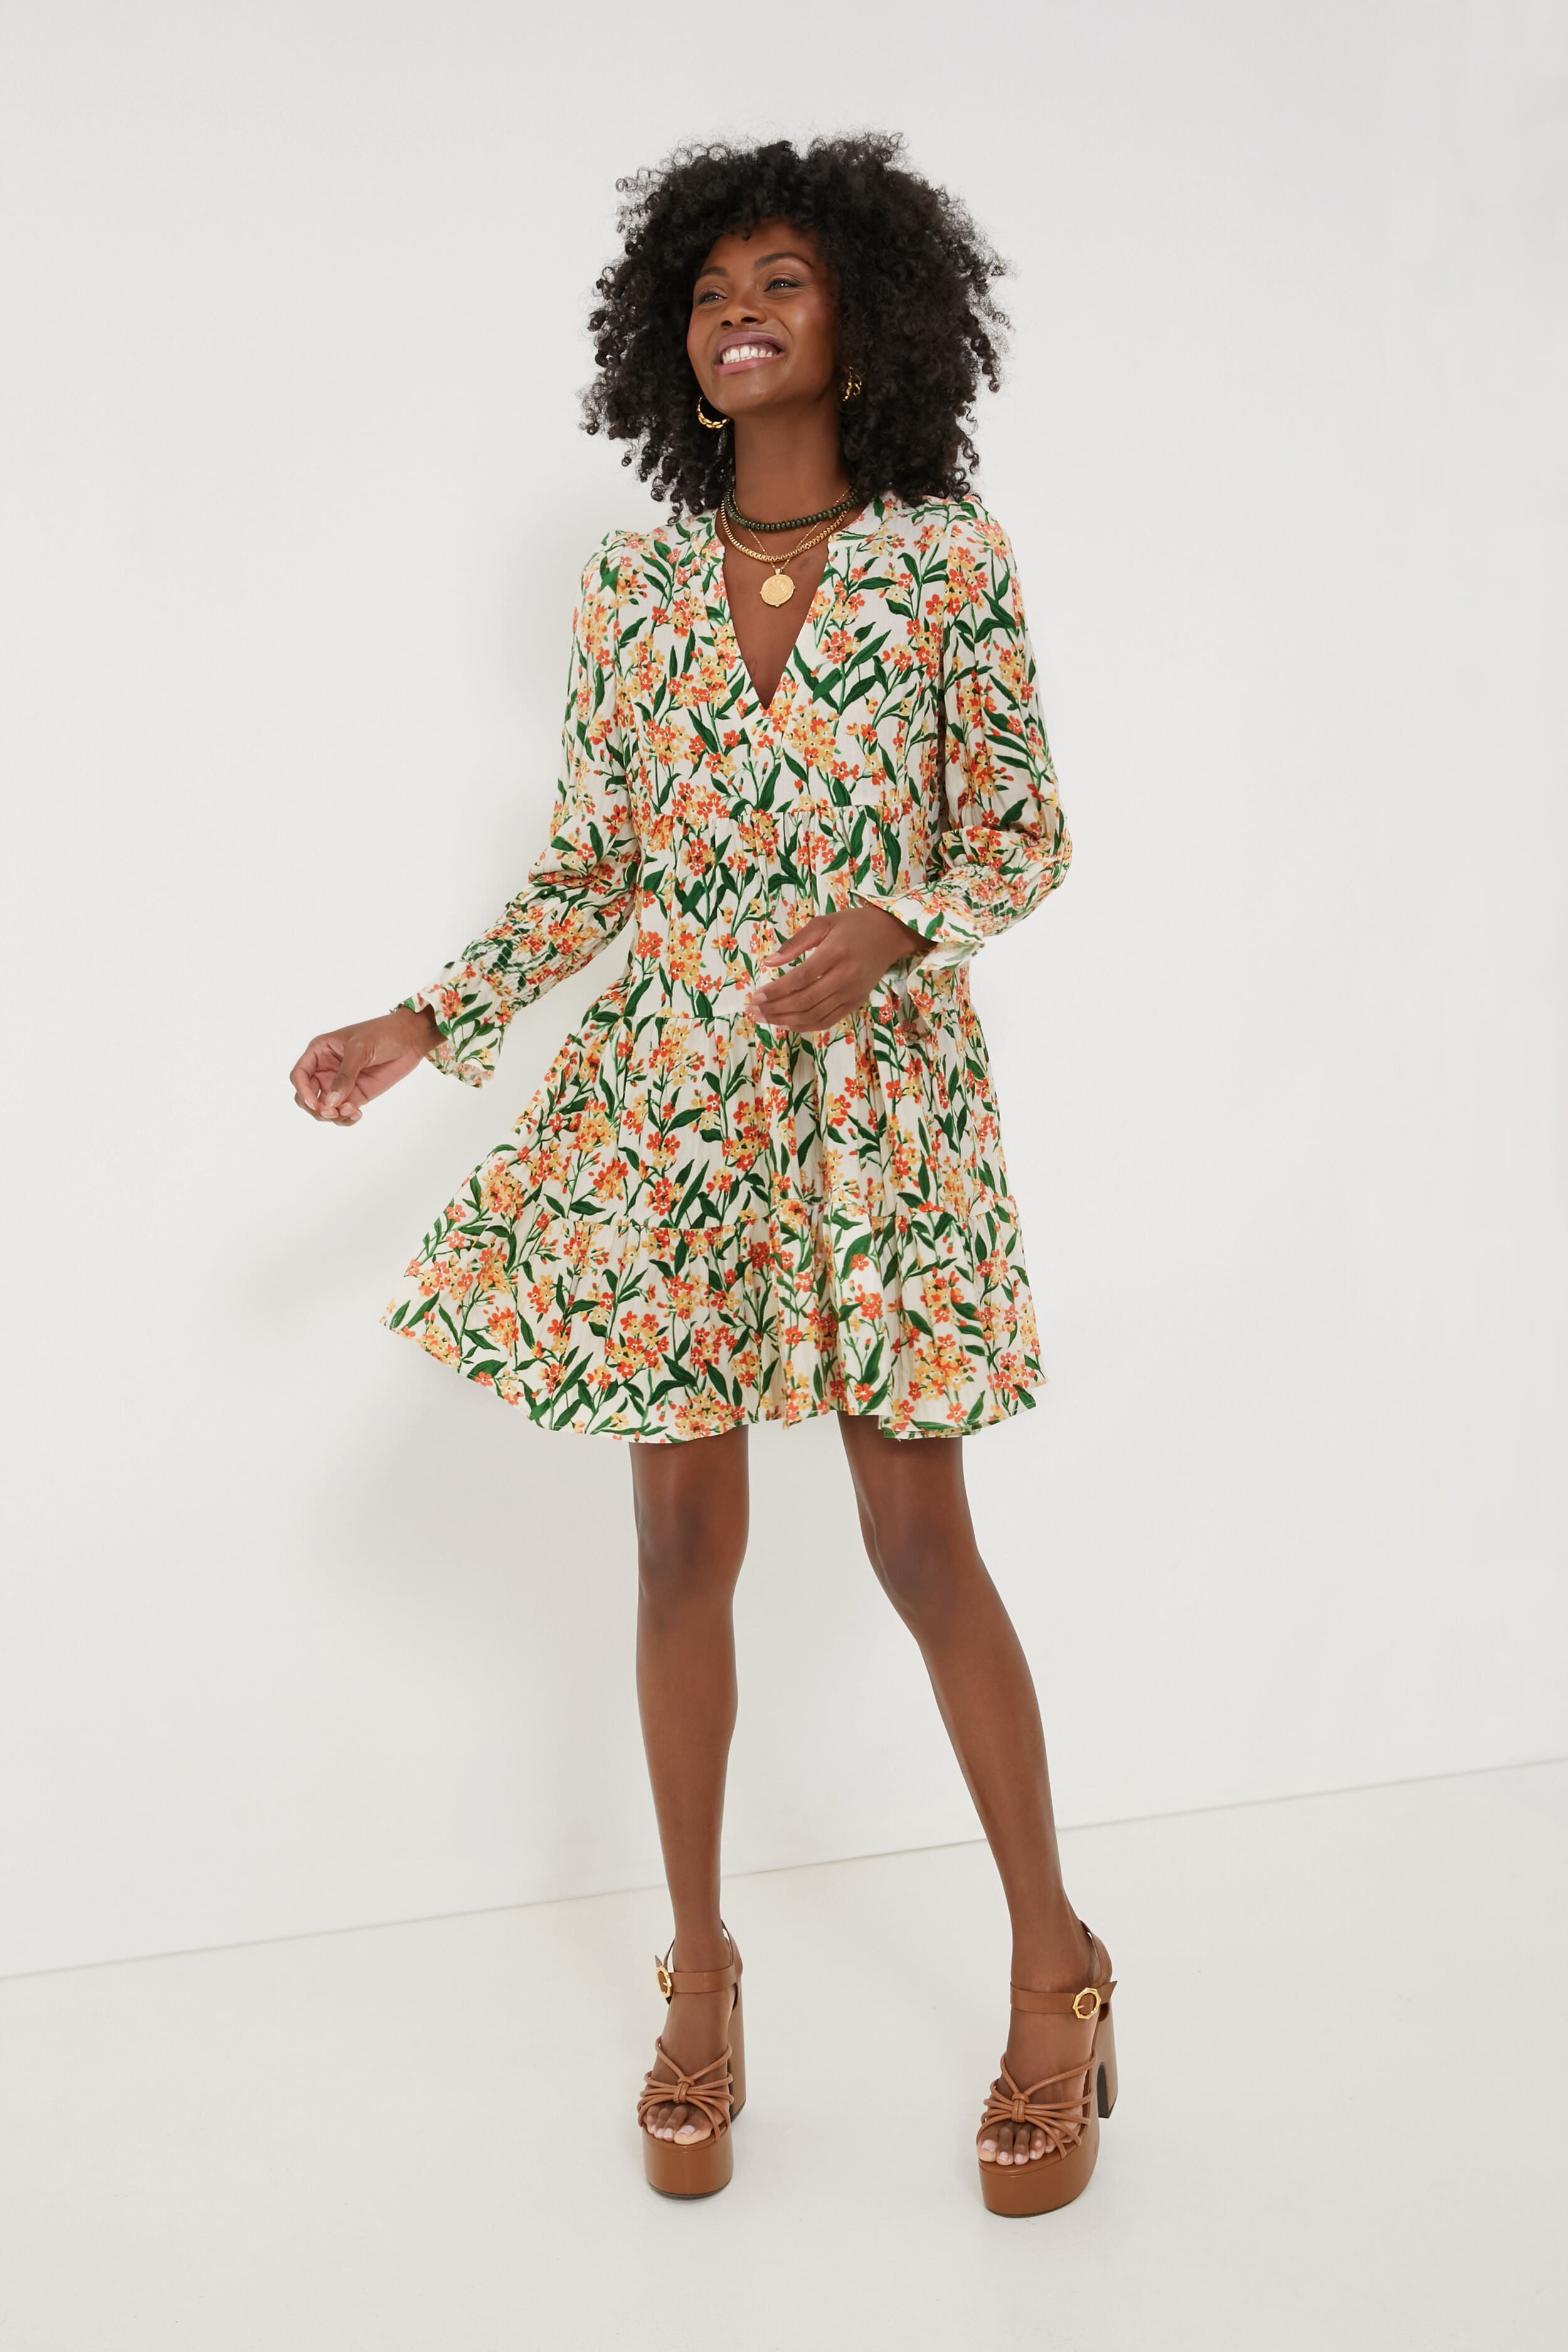 Bermuda Blossom Kenzo Dress